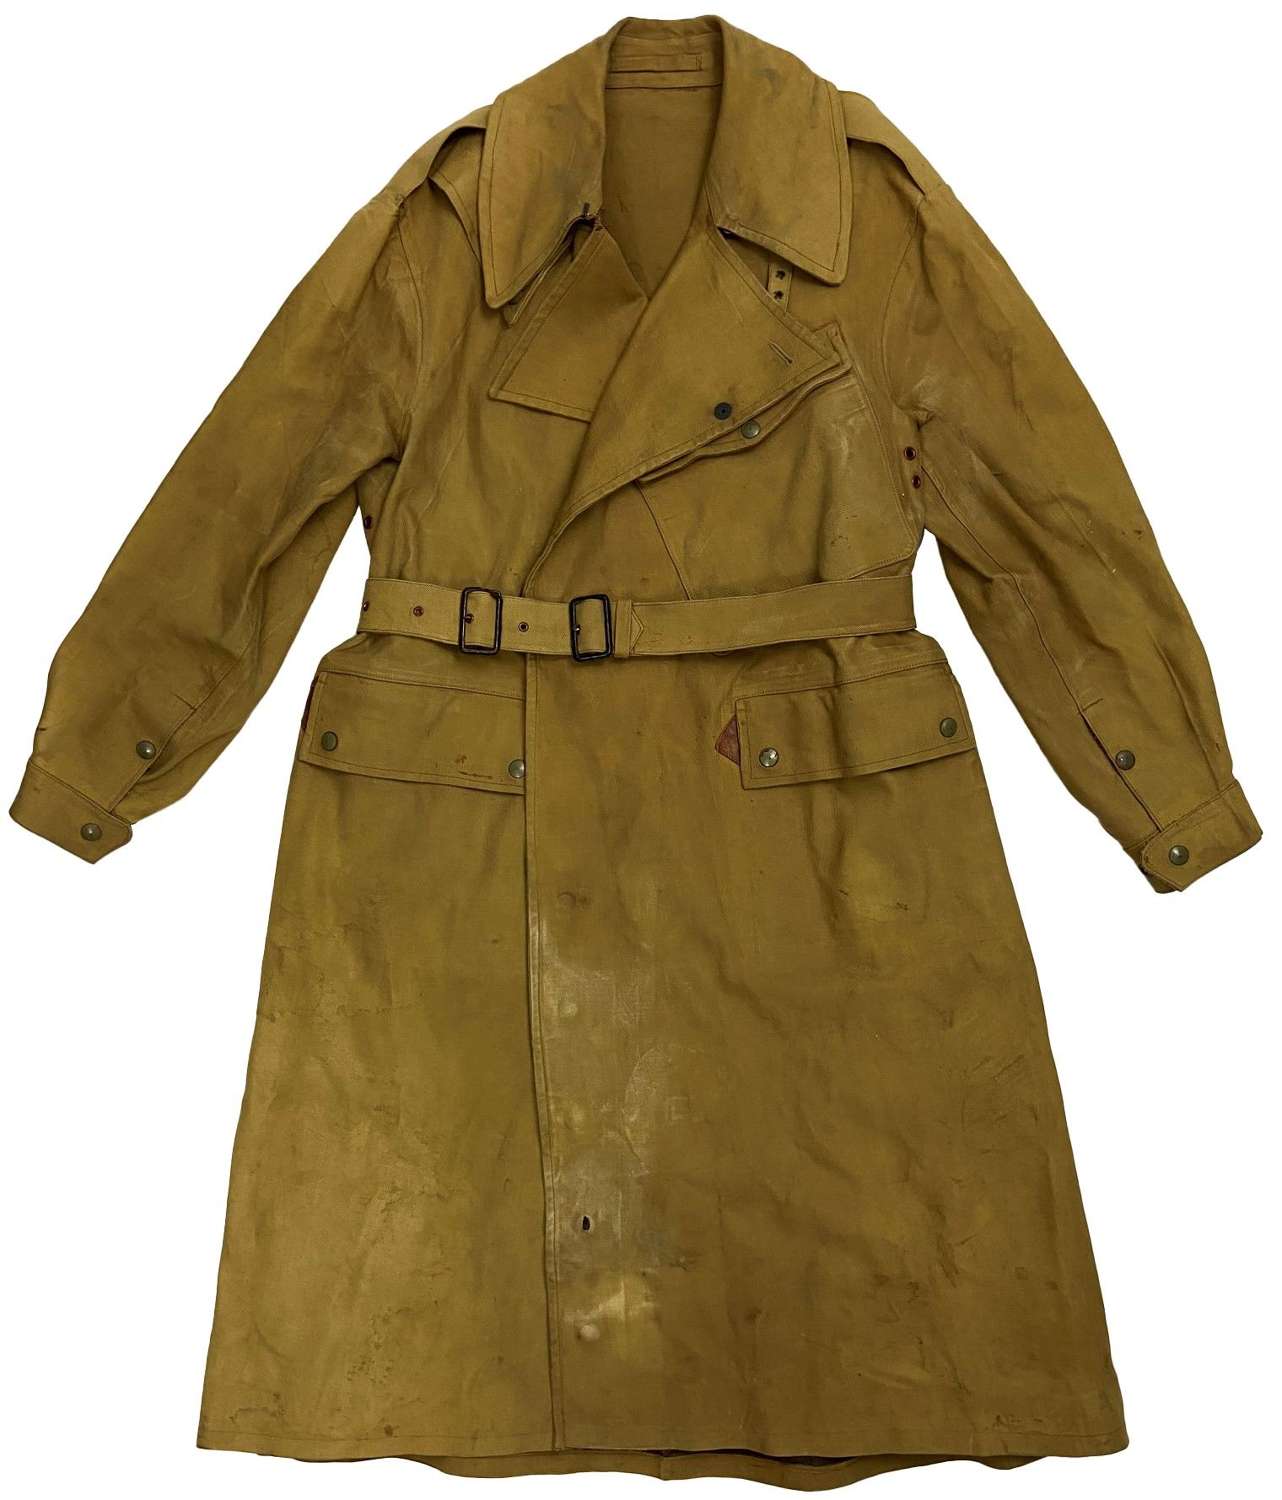 Original 1943 Dated British Army Dispatch Riders Coat - Size 7